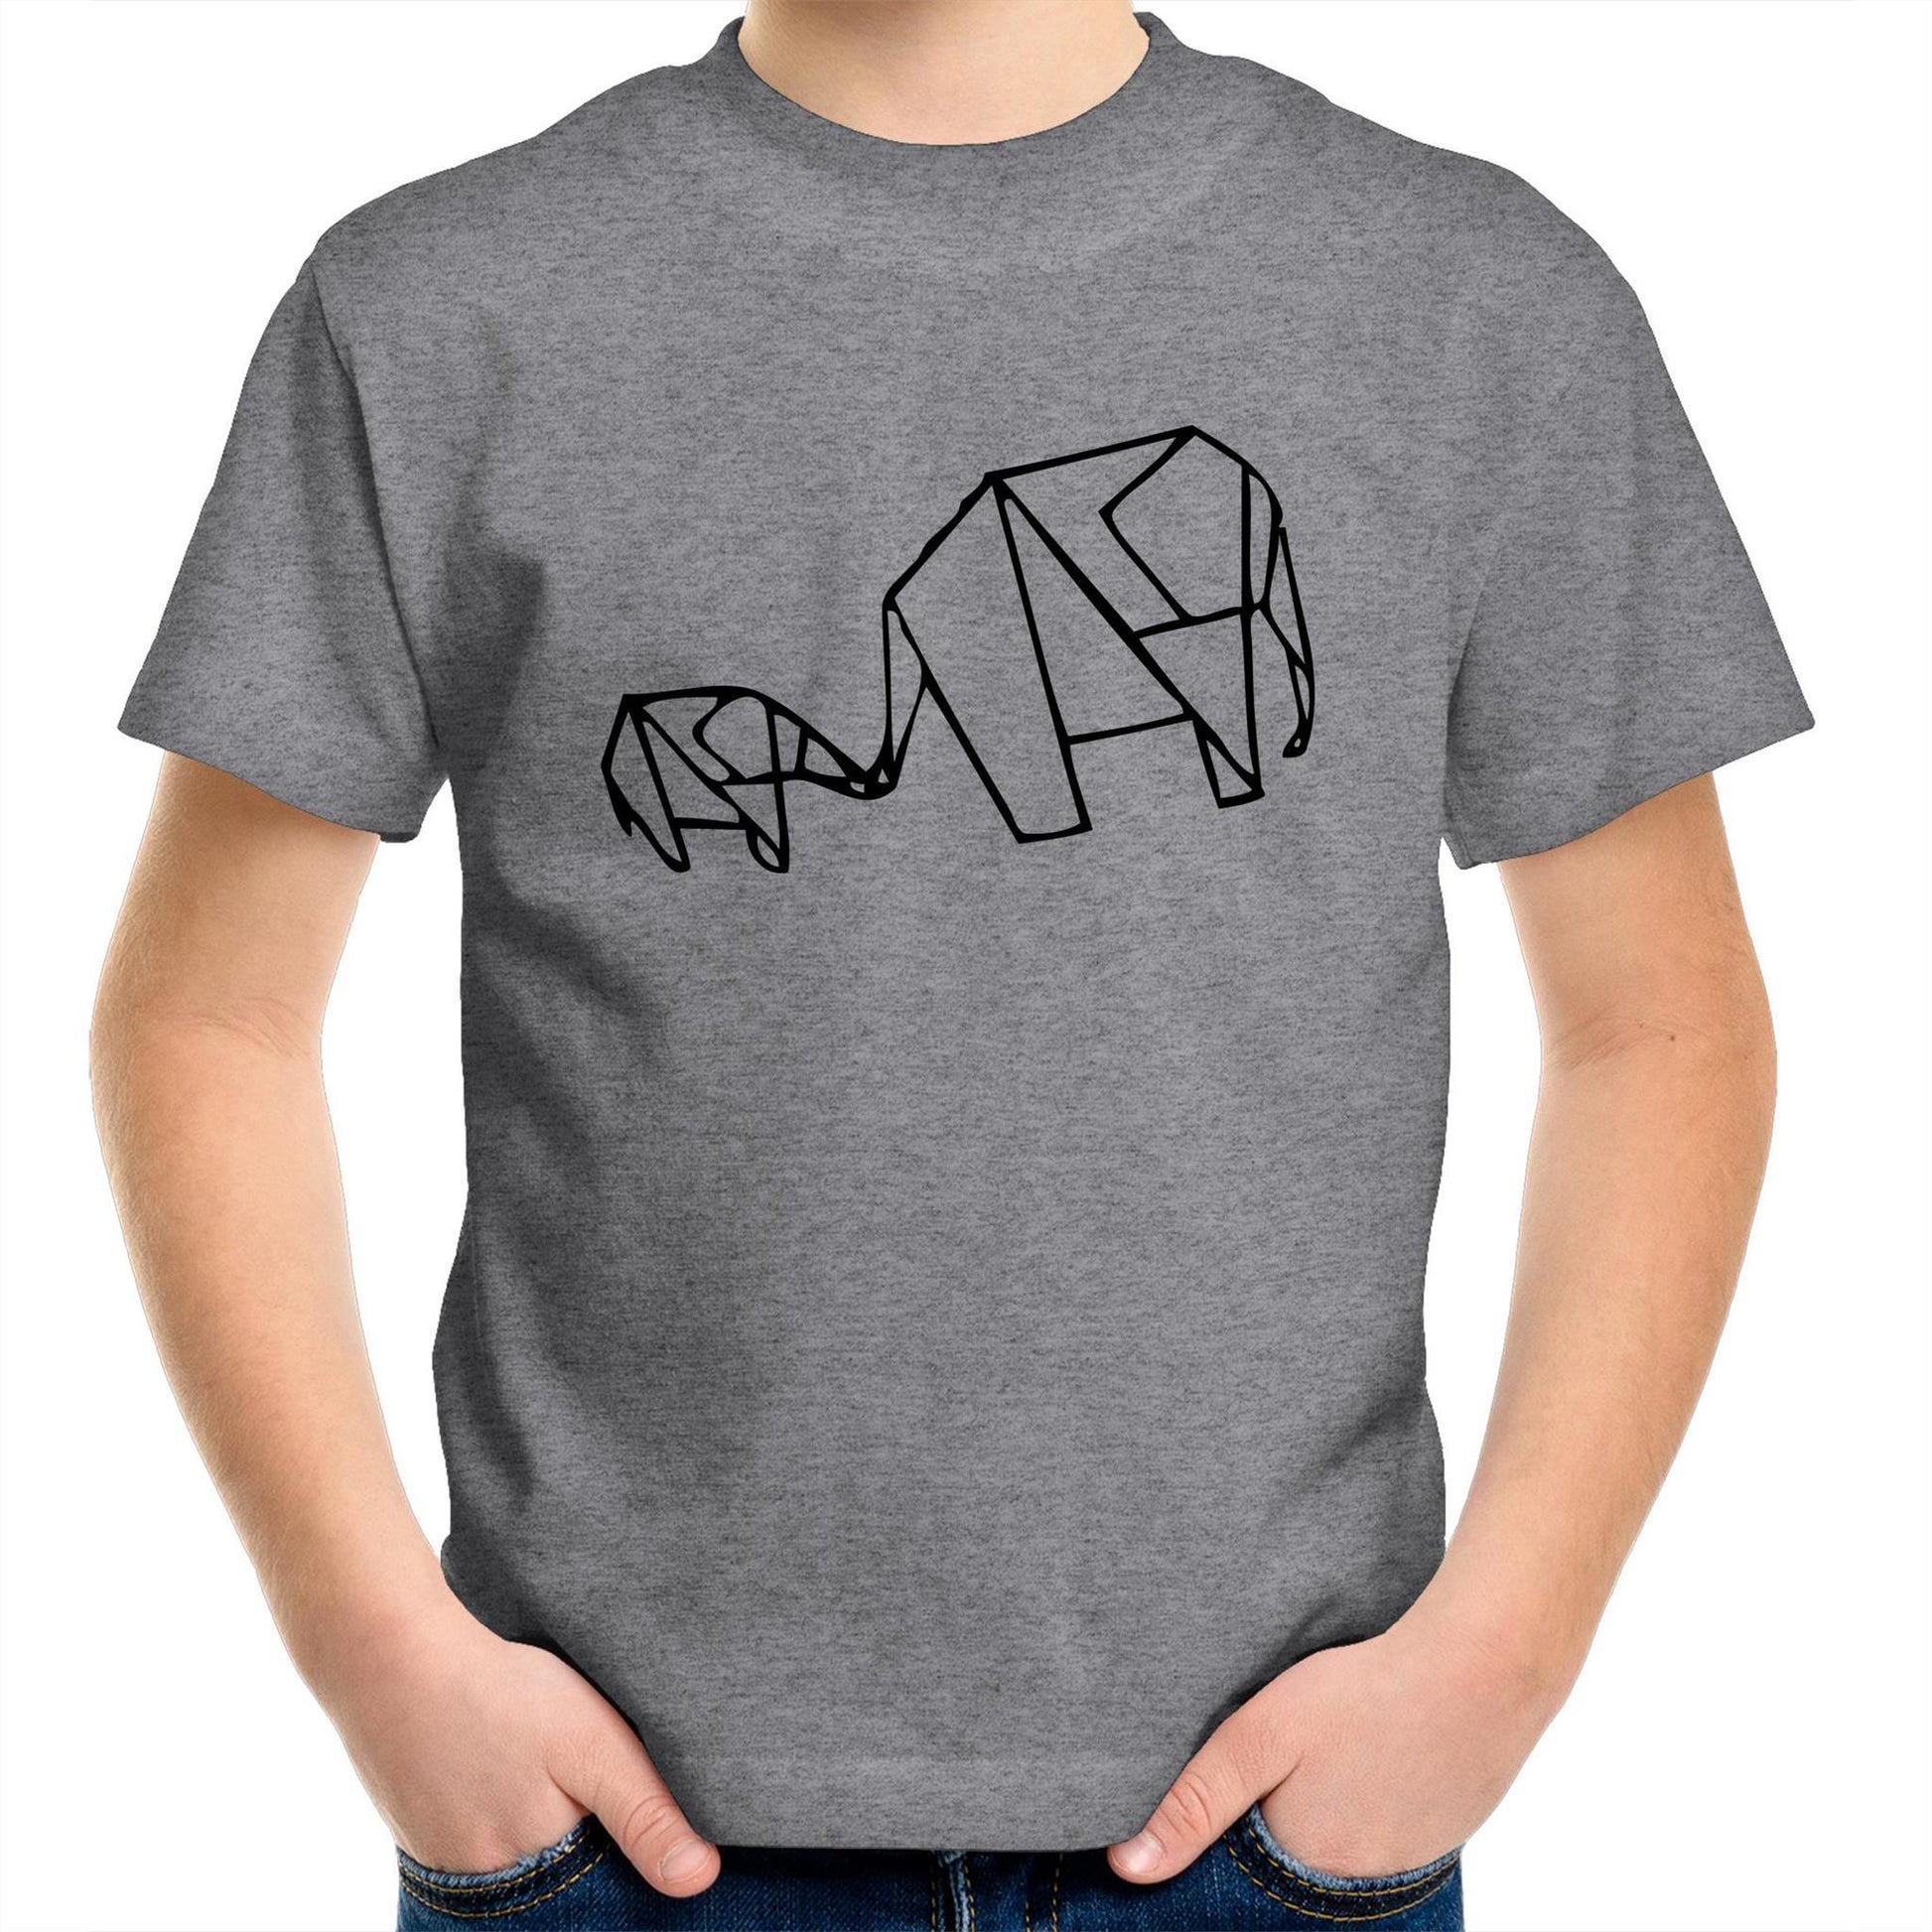 Origami Elephant - Kids Youth Crew T-Shirt Grey Marle Kids Youth T-shirt animal